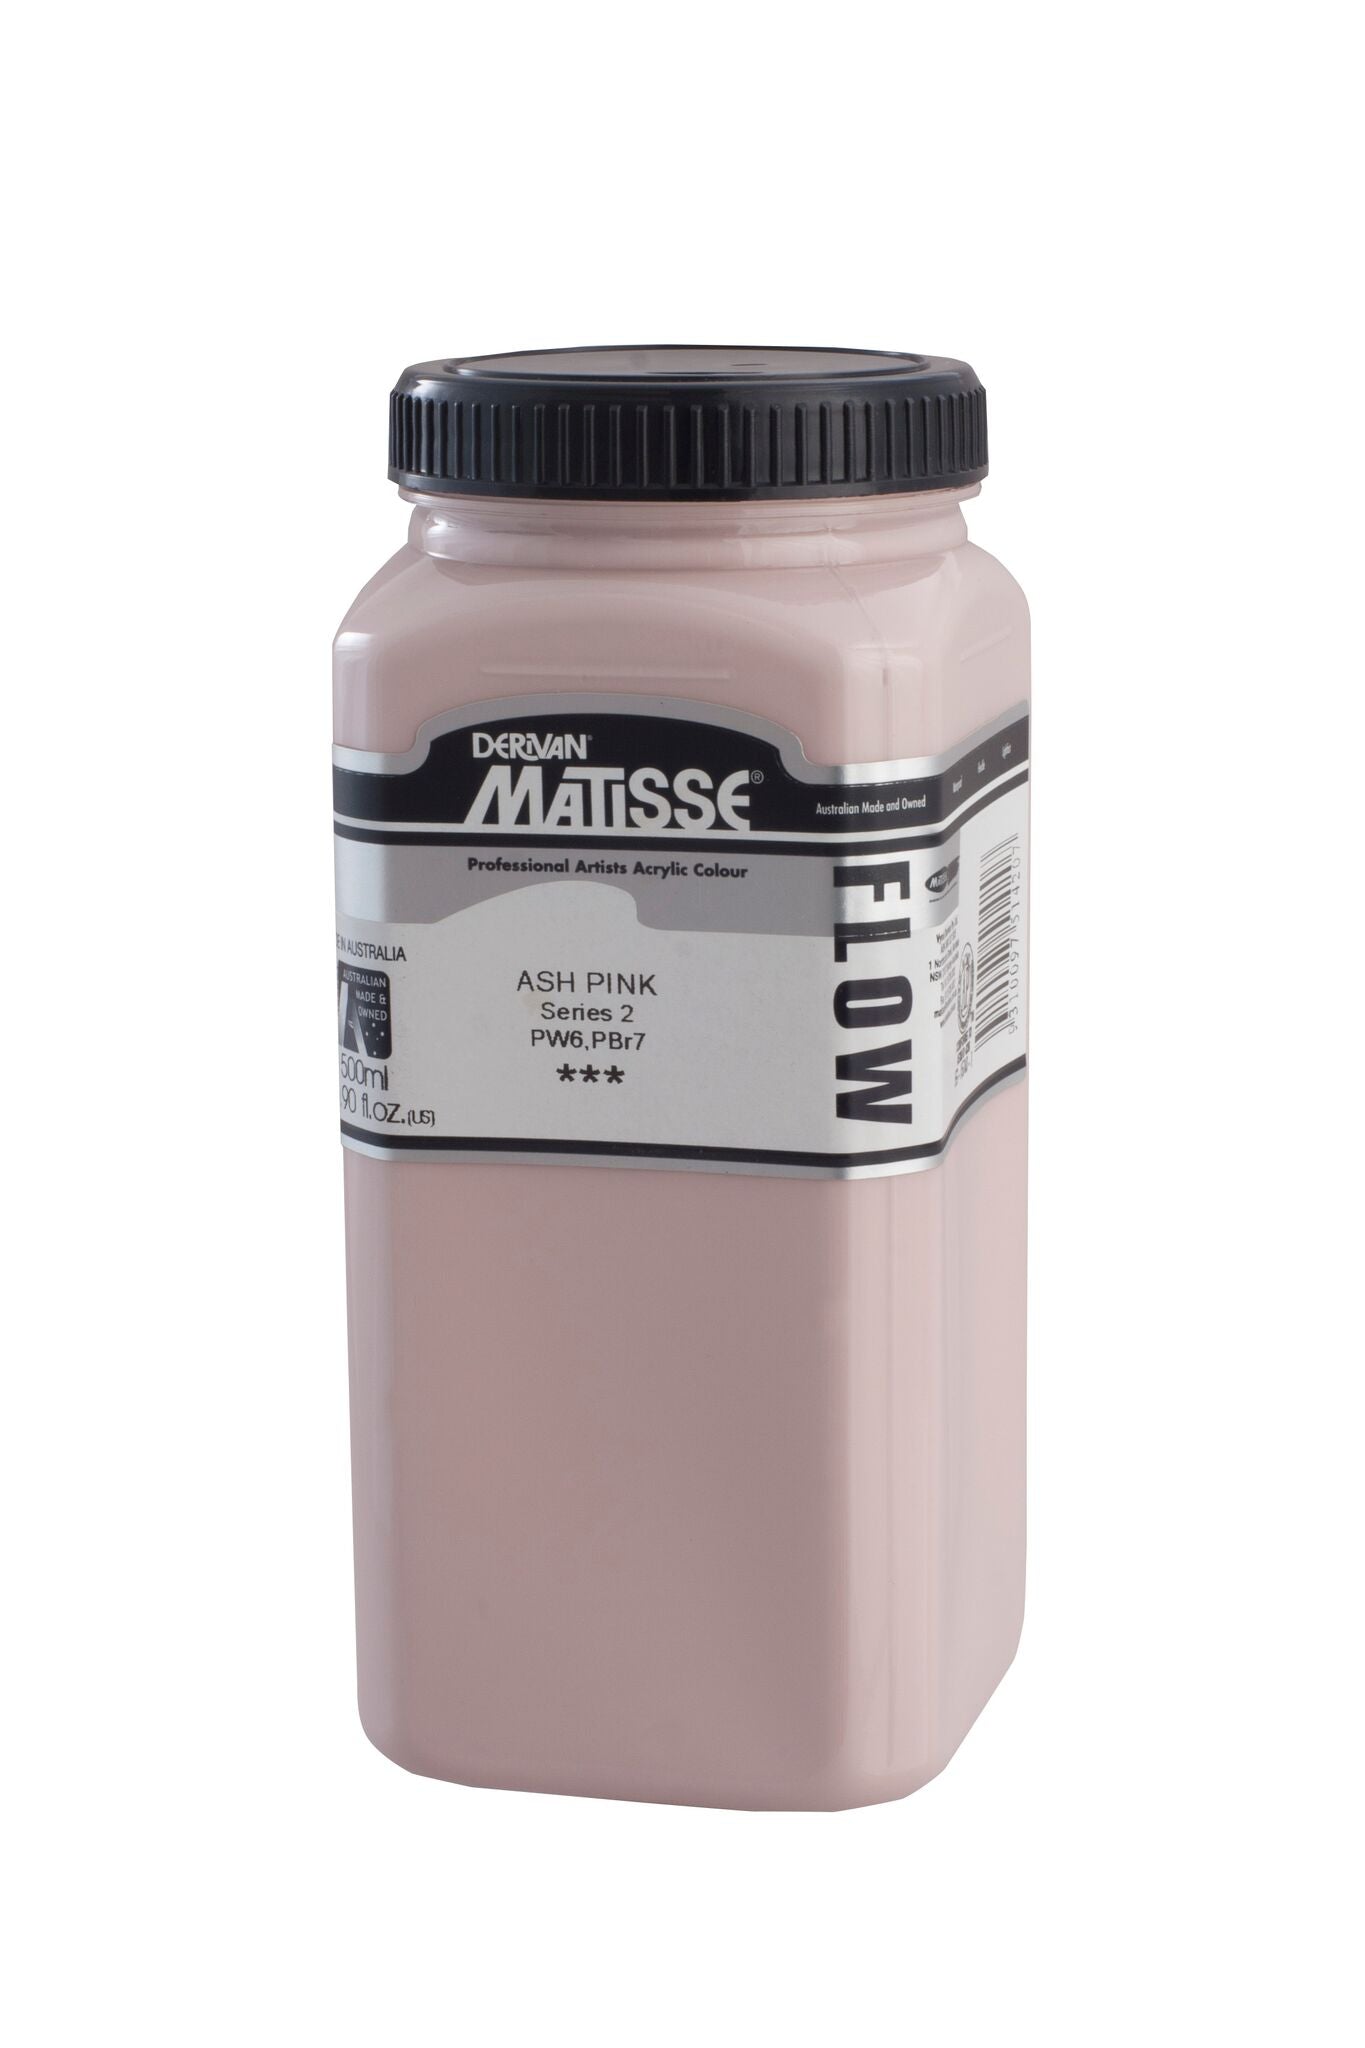 Matisse Flow 500ml Ash Pink - theartshop.com.au